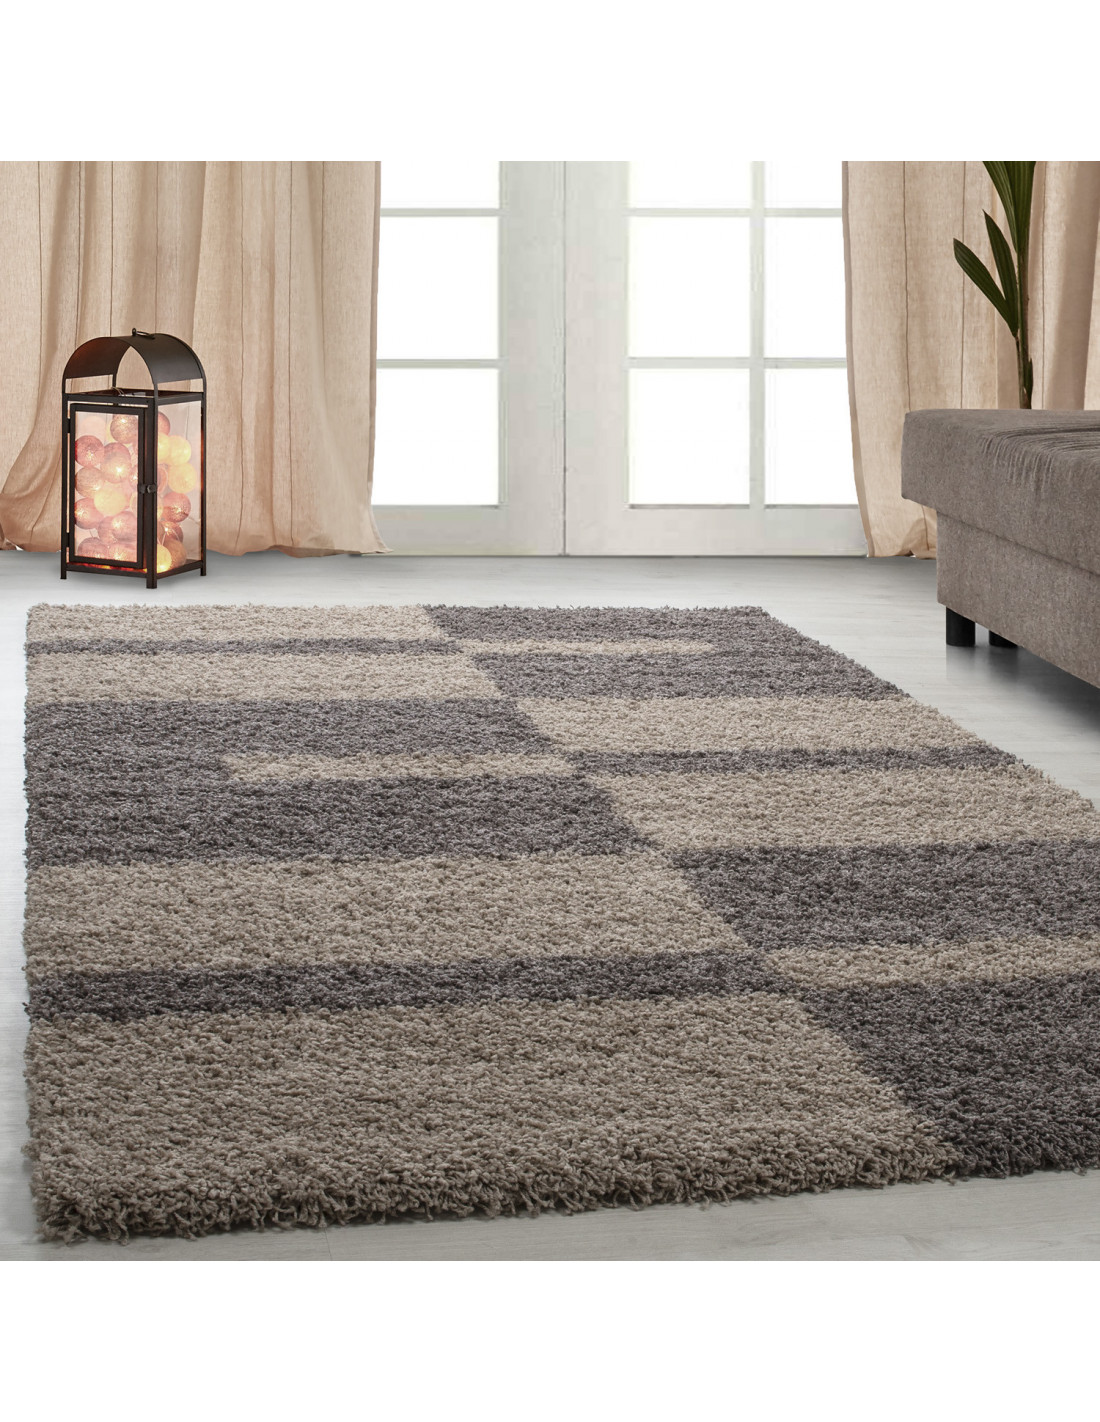 Deep pile long pile living room GALA Shaggy carpet pile height 3cm taupe-beige